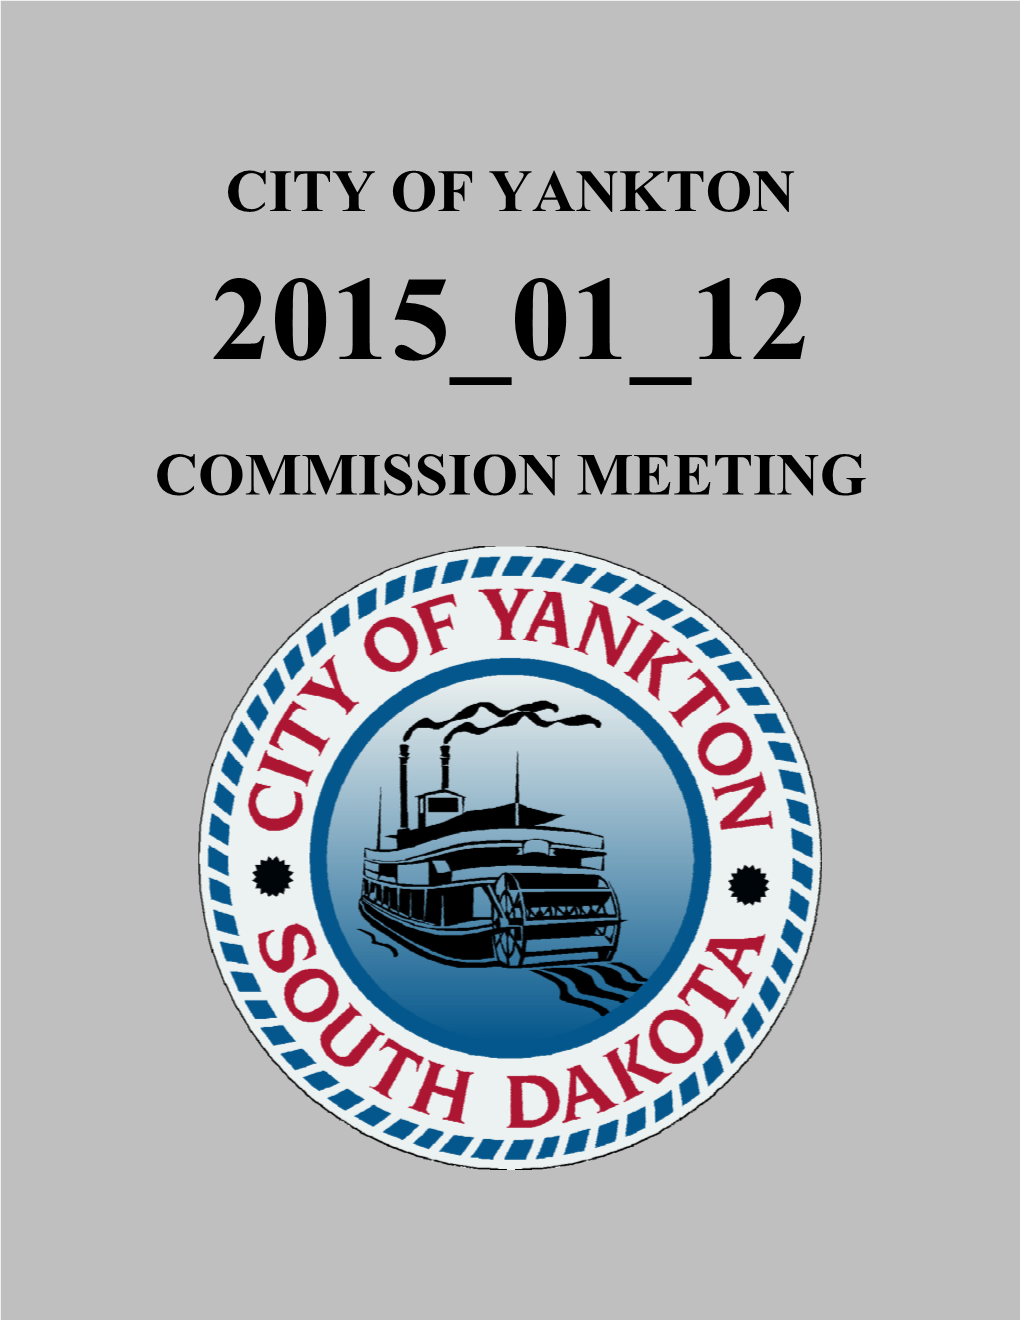 City of Yankton Commission Meeting